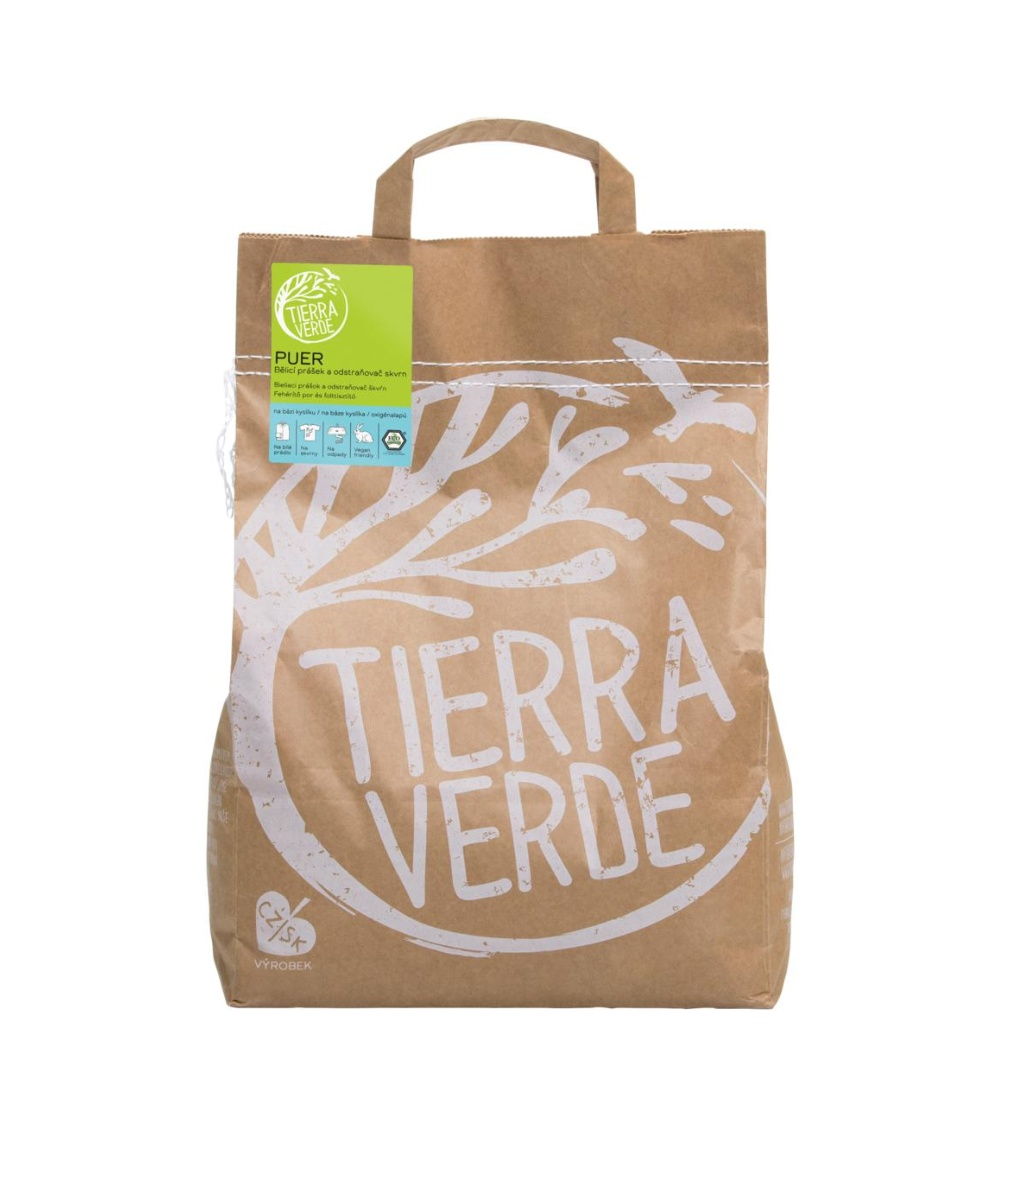 Tierra Verde Puer bělicí prášek a odstraňovač skvrn 5 kg Tierra Verde